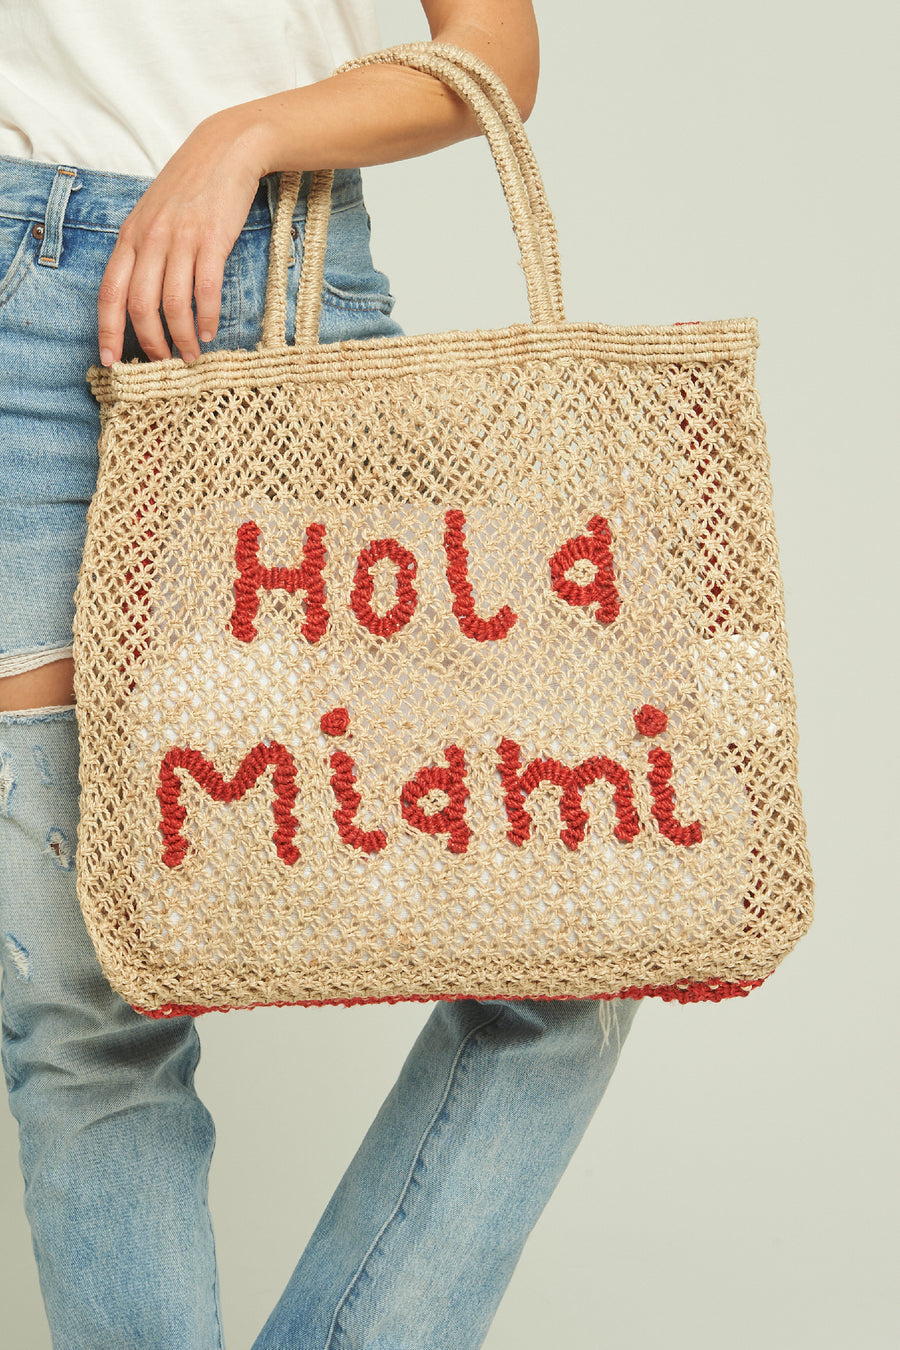 The Jacksons Hola Miami Bag - shopsigal